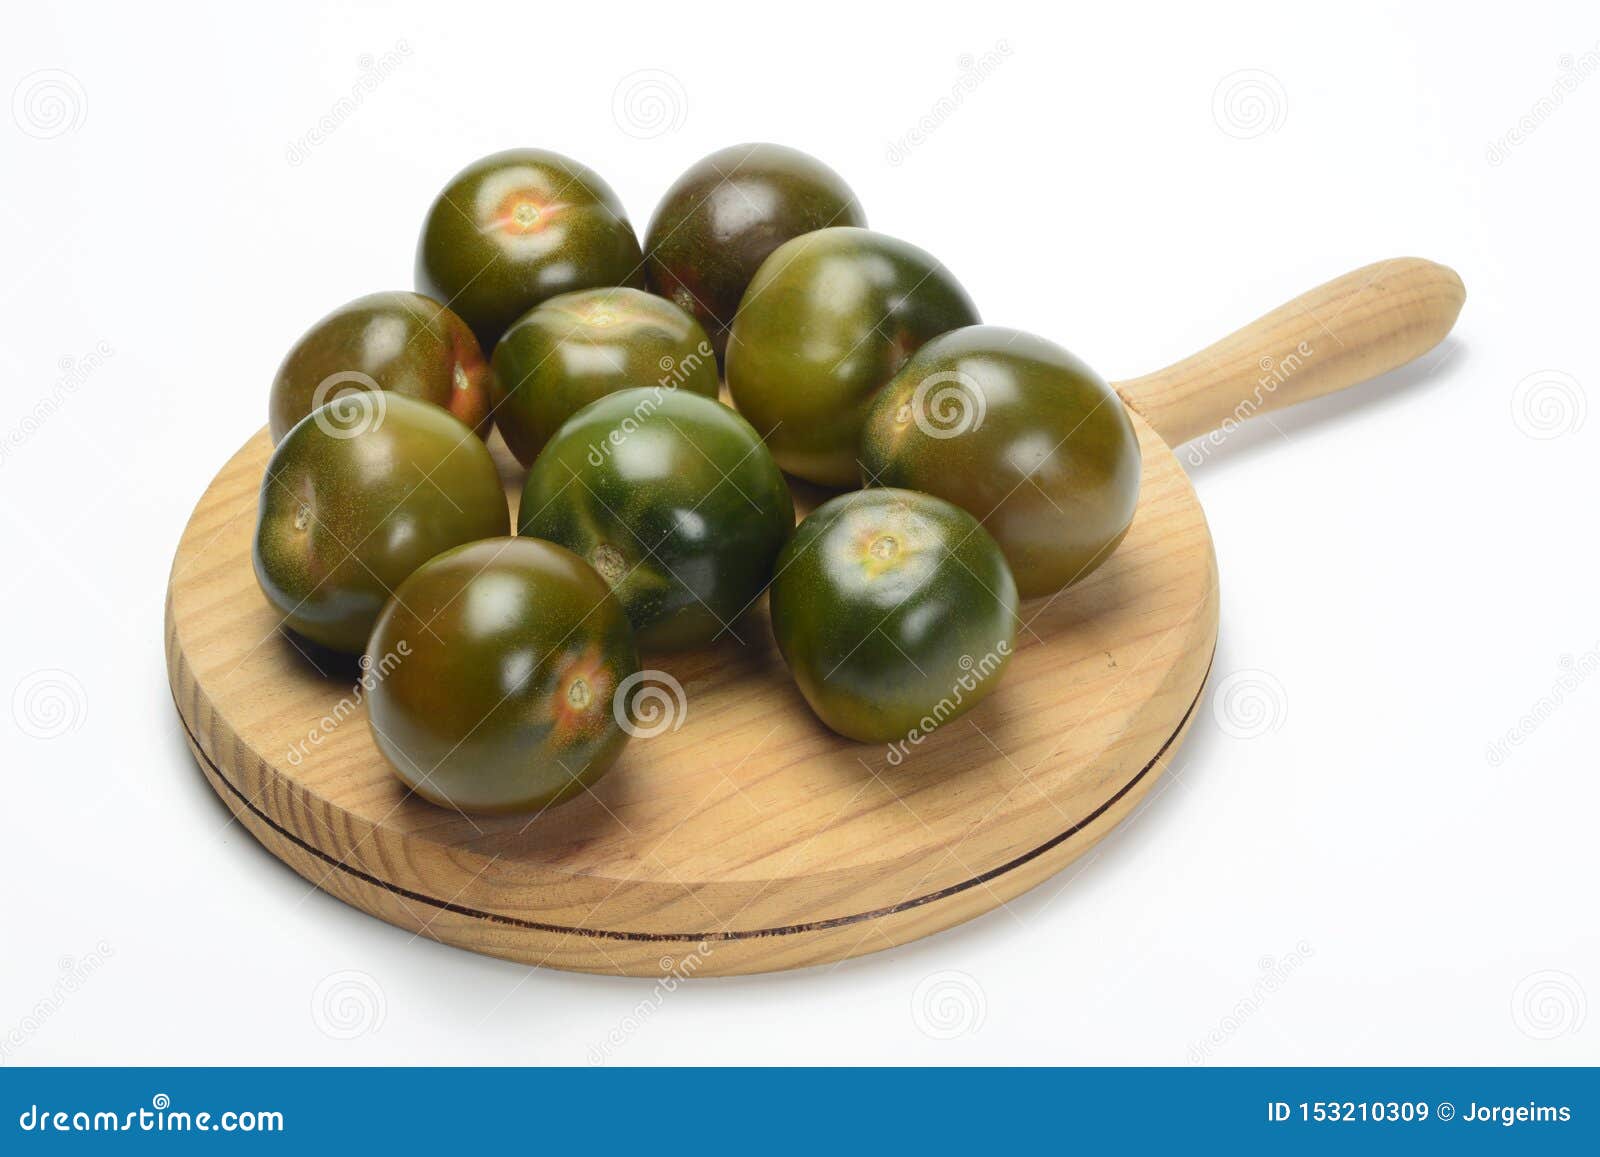 tomate kumato on the table